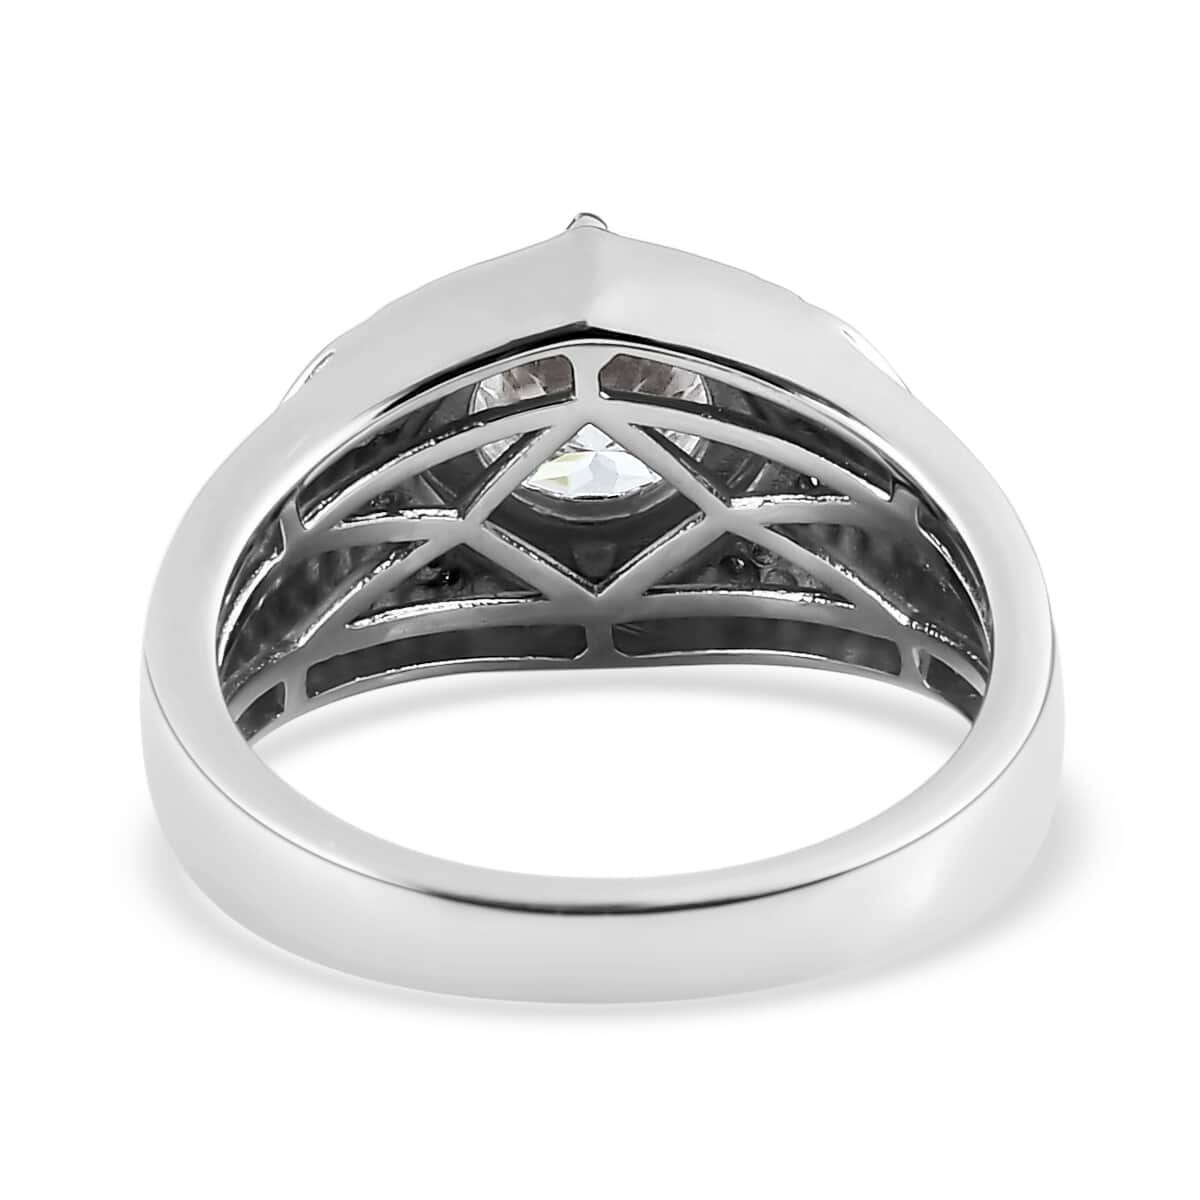 100 Facet Moissanite Men's Ring in Platinum Over Sterling Silver (Size 14.0) 1.85 ctw image number 4